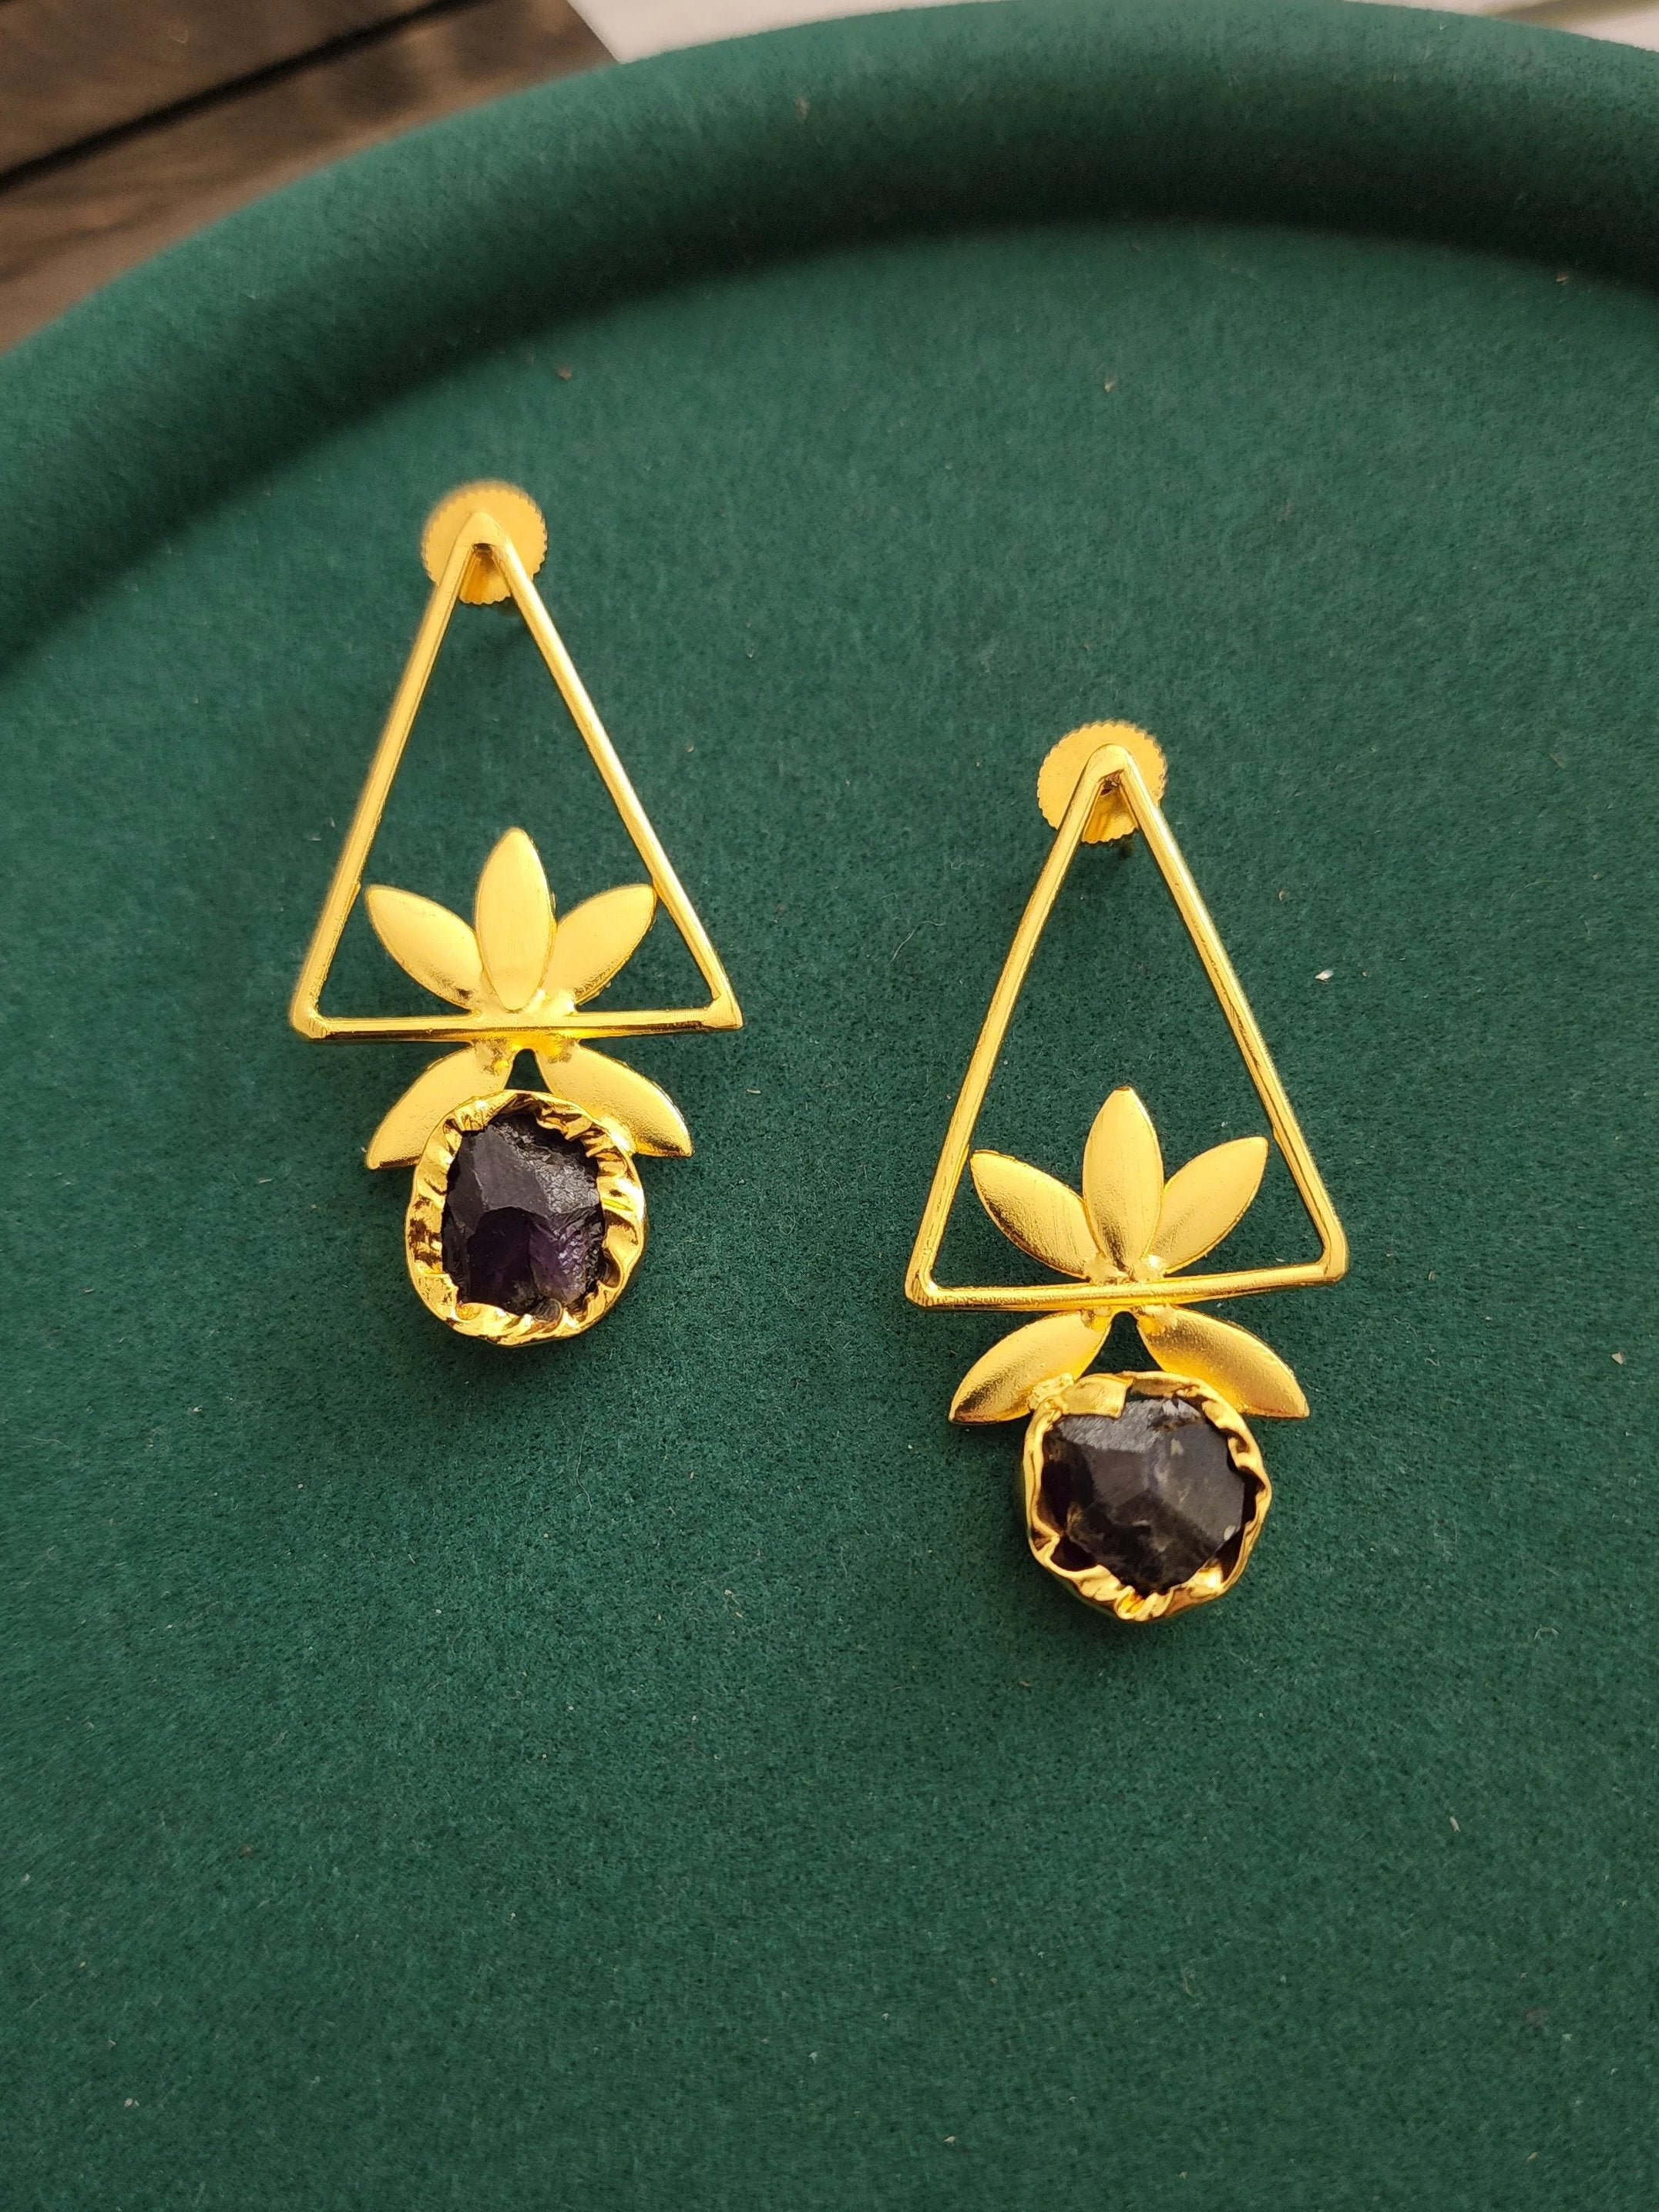 Poppy Contemporary earrings